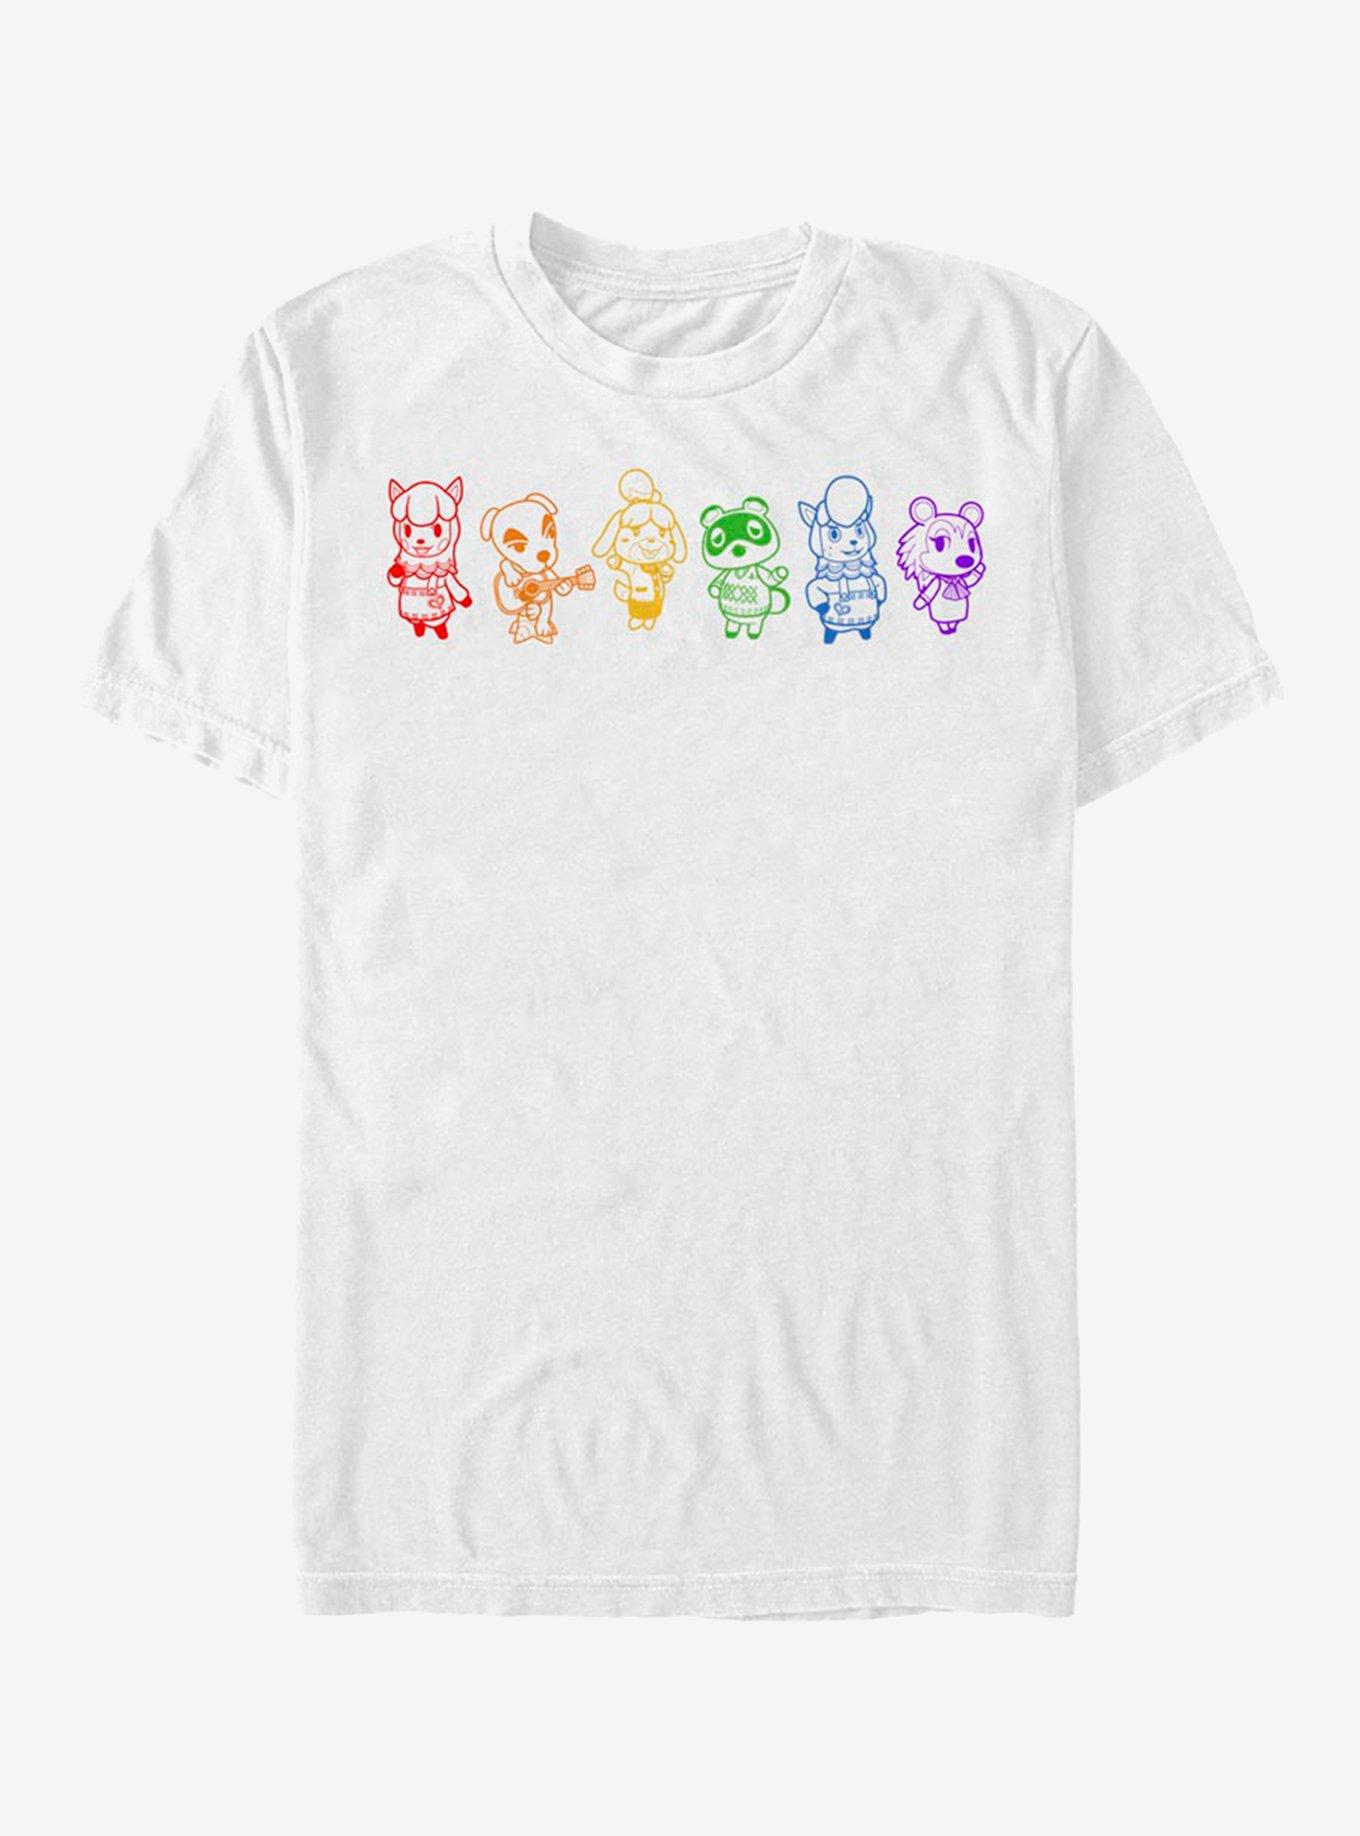 Extra Soft Nintendo Animal Crossing Line Art Rainbow T-Shirt